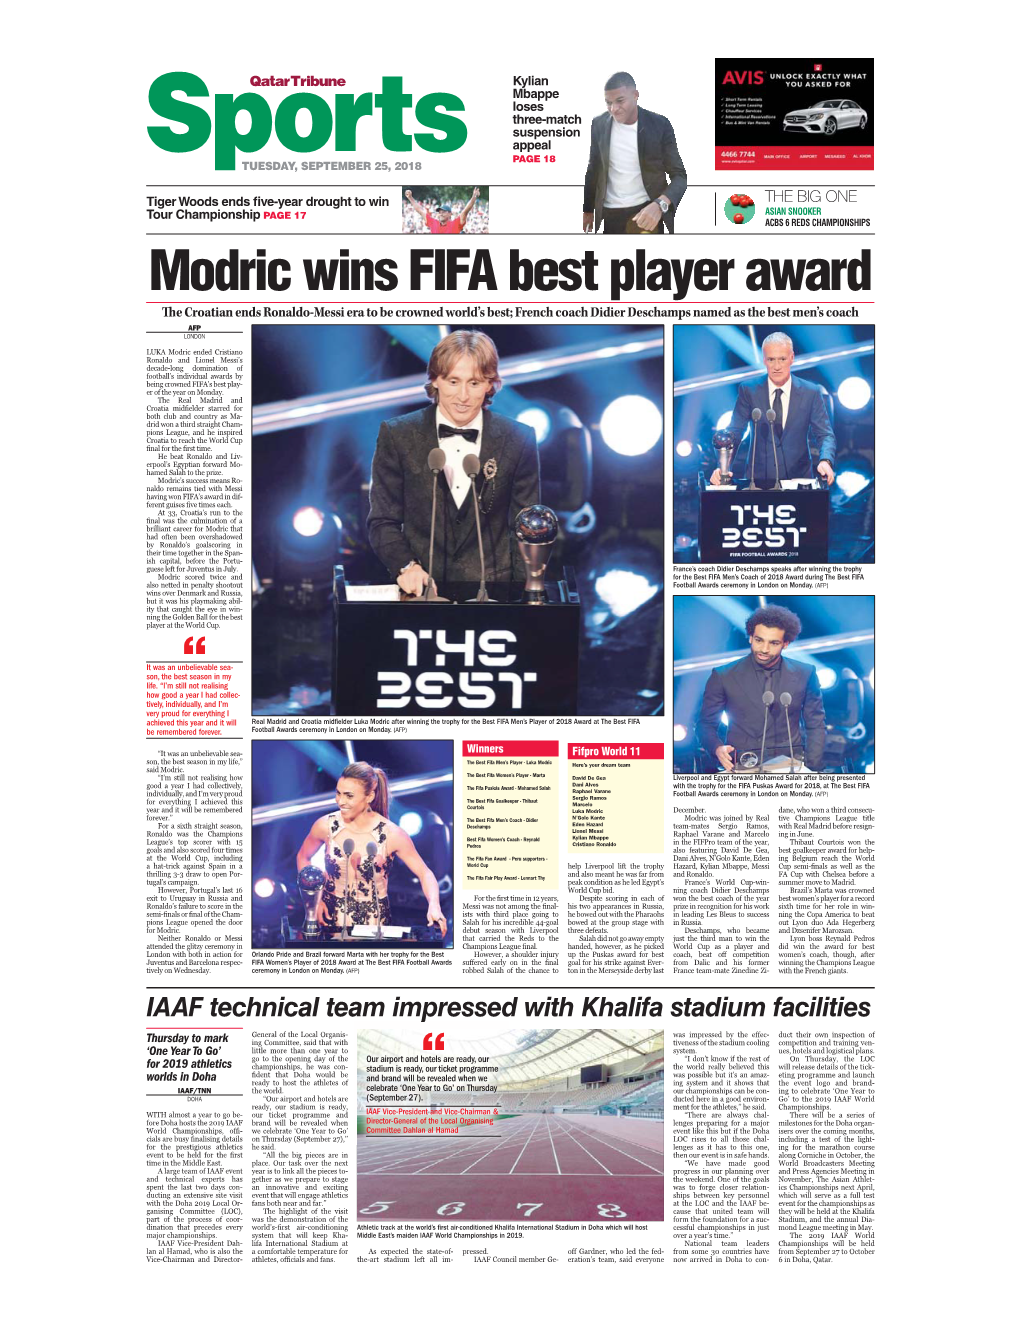 Modric Wins FIFA Best Player Award